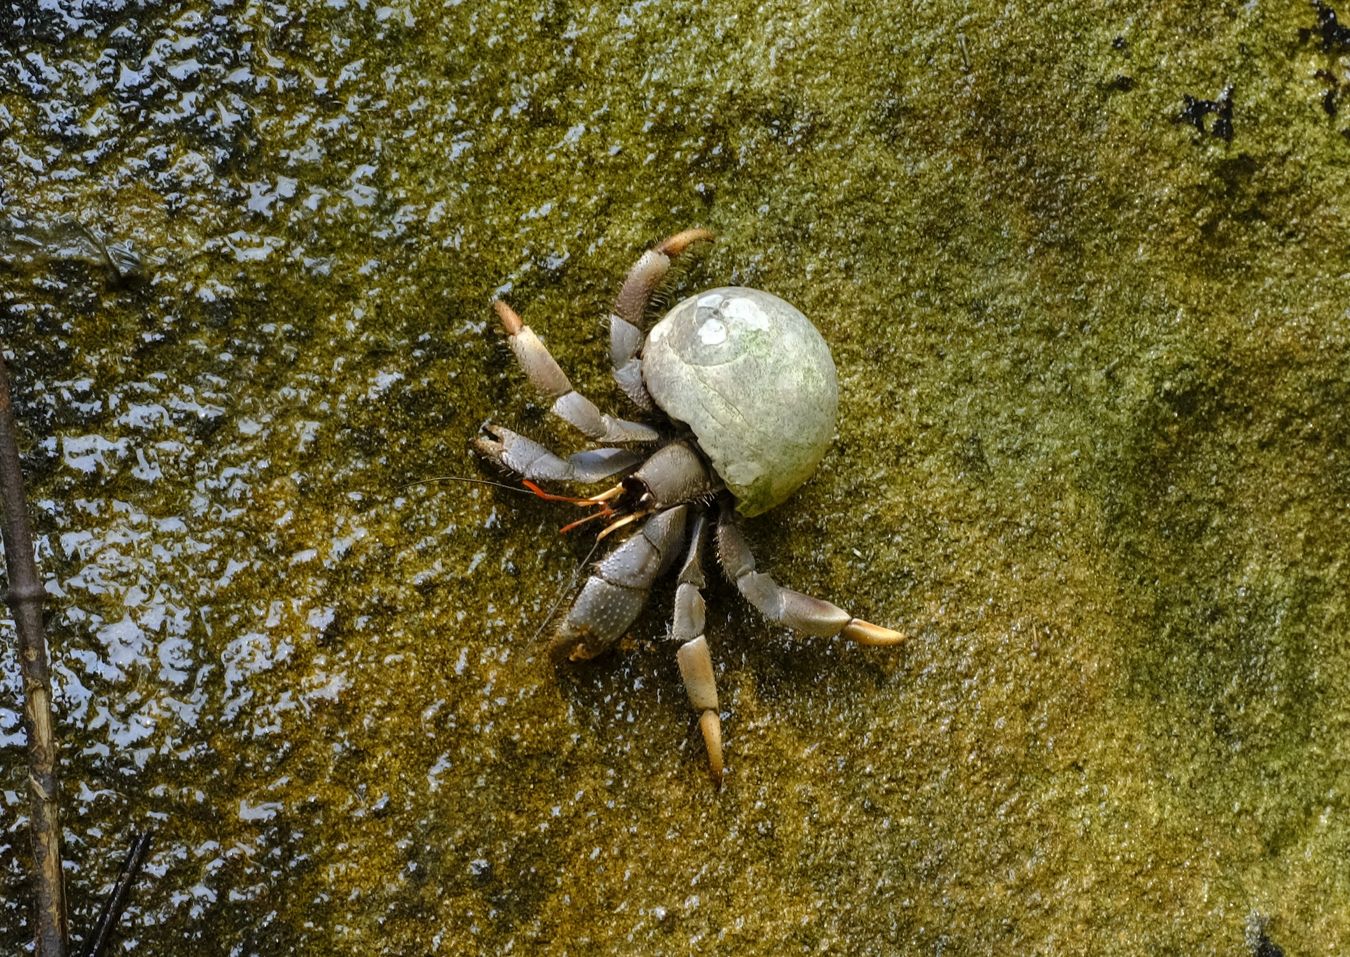 Viola Land Hermit Crab { Coenoobita Violascens }